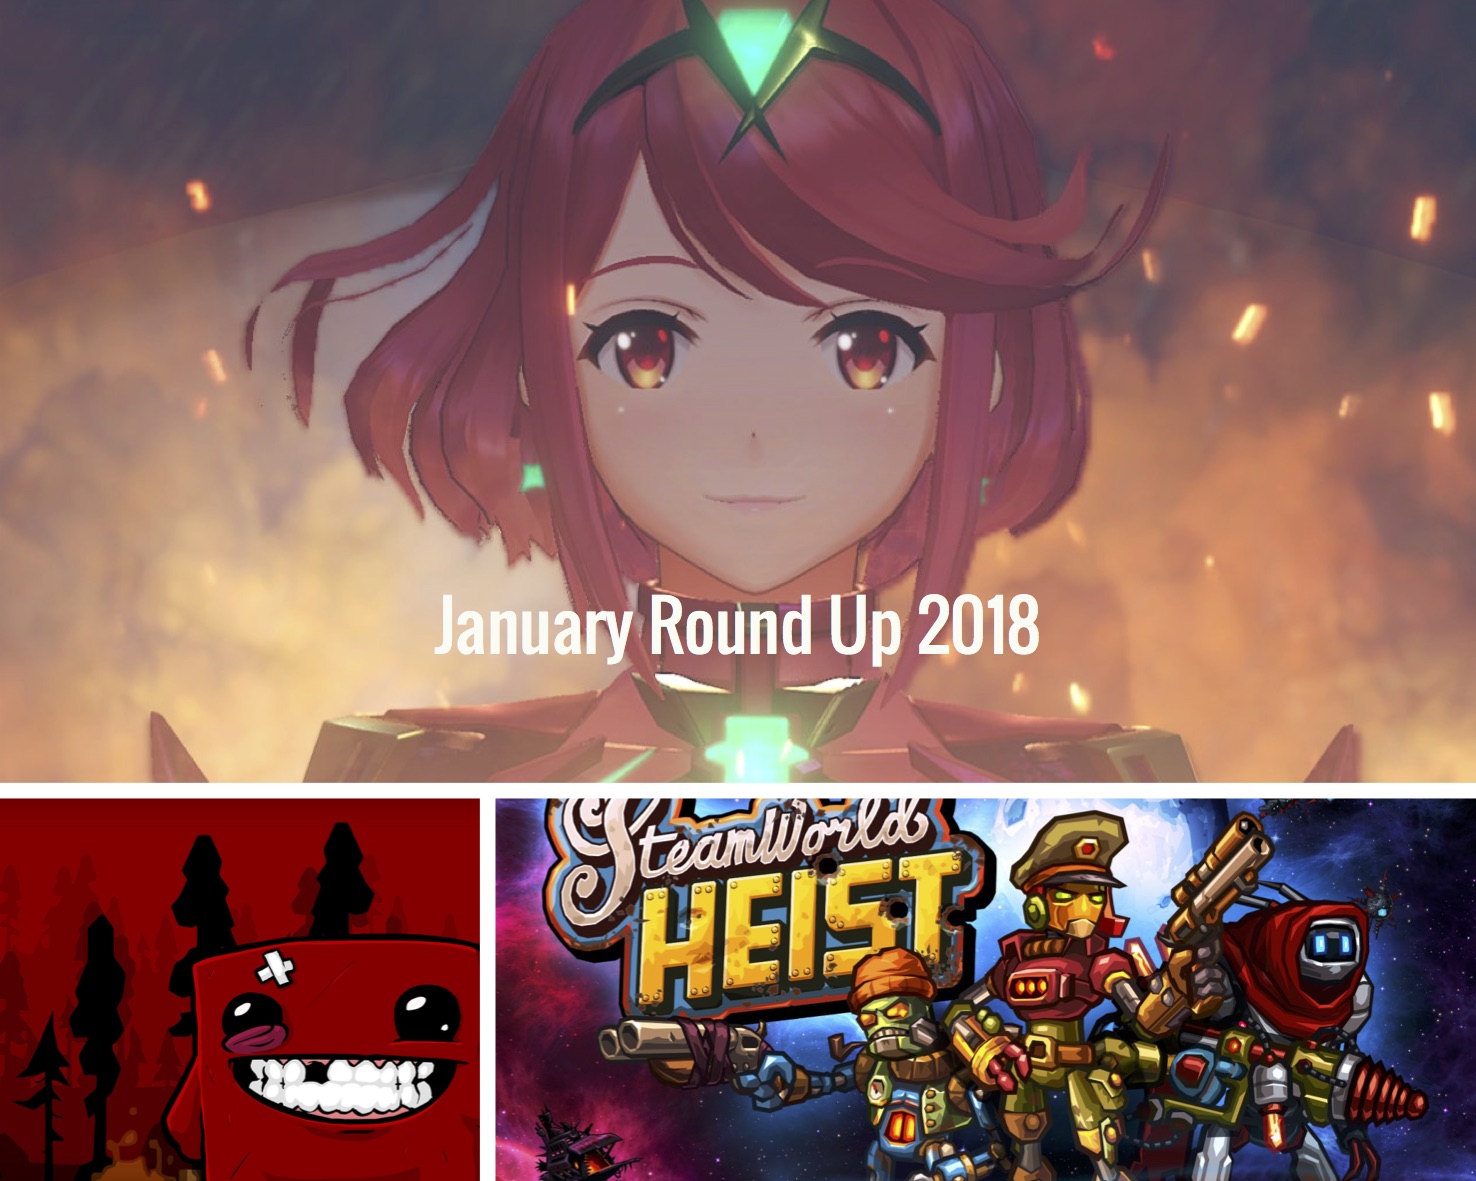 January Round Up 2018